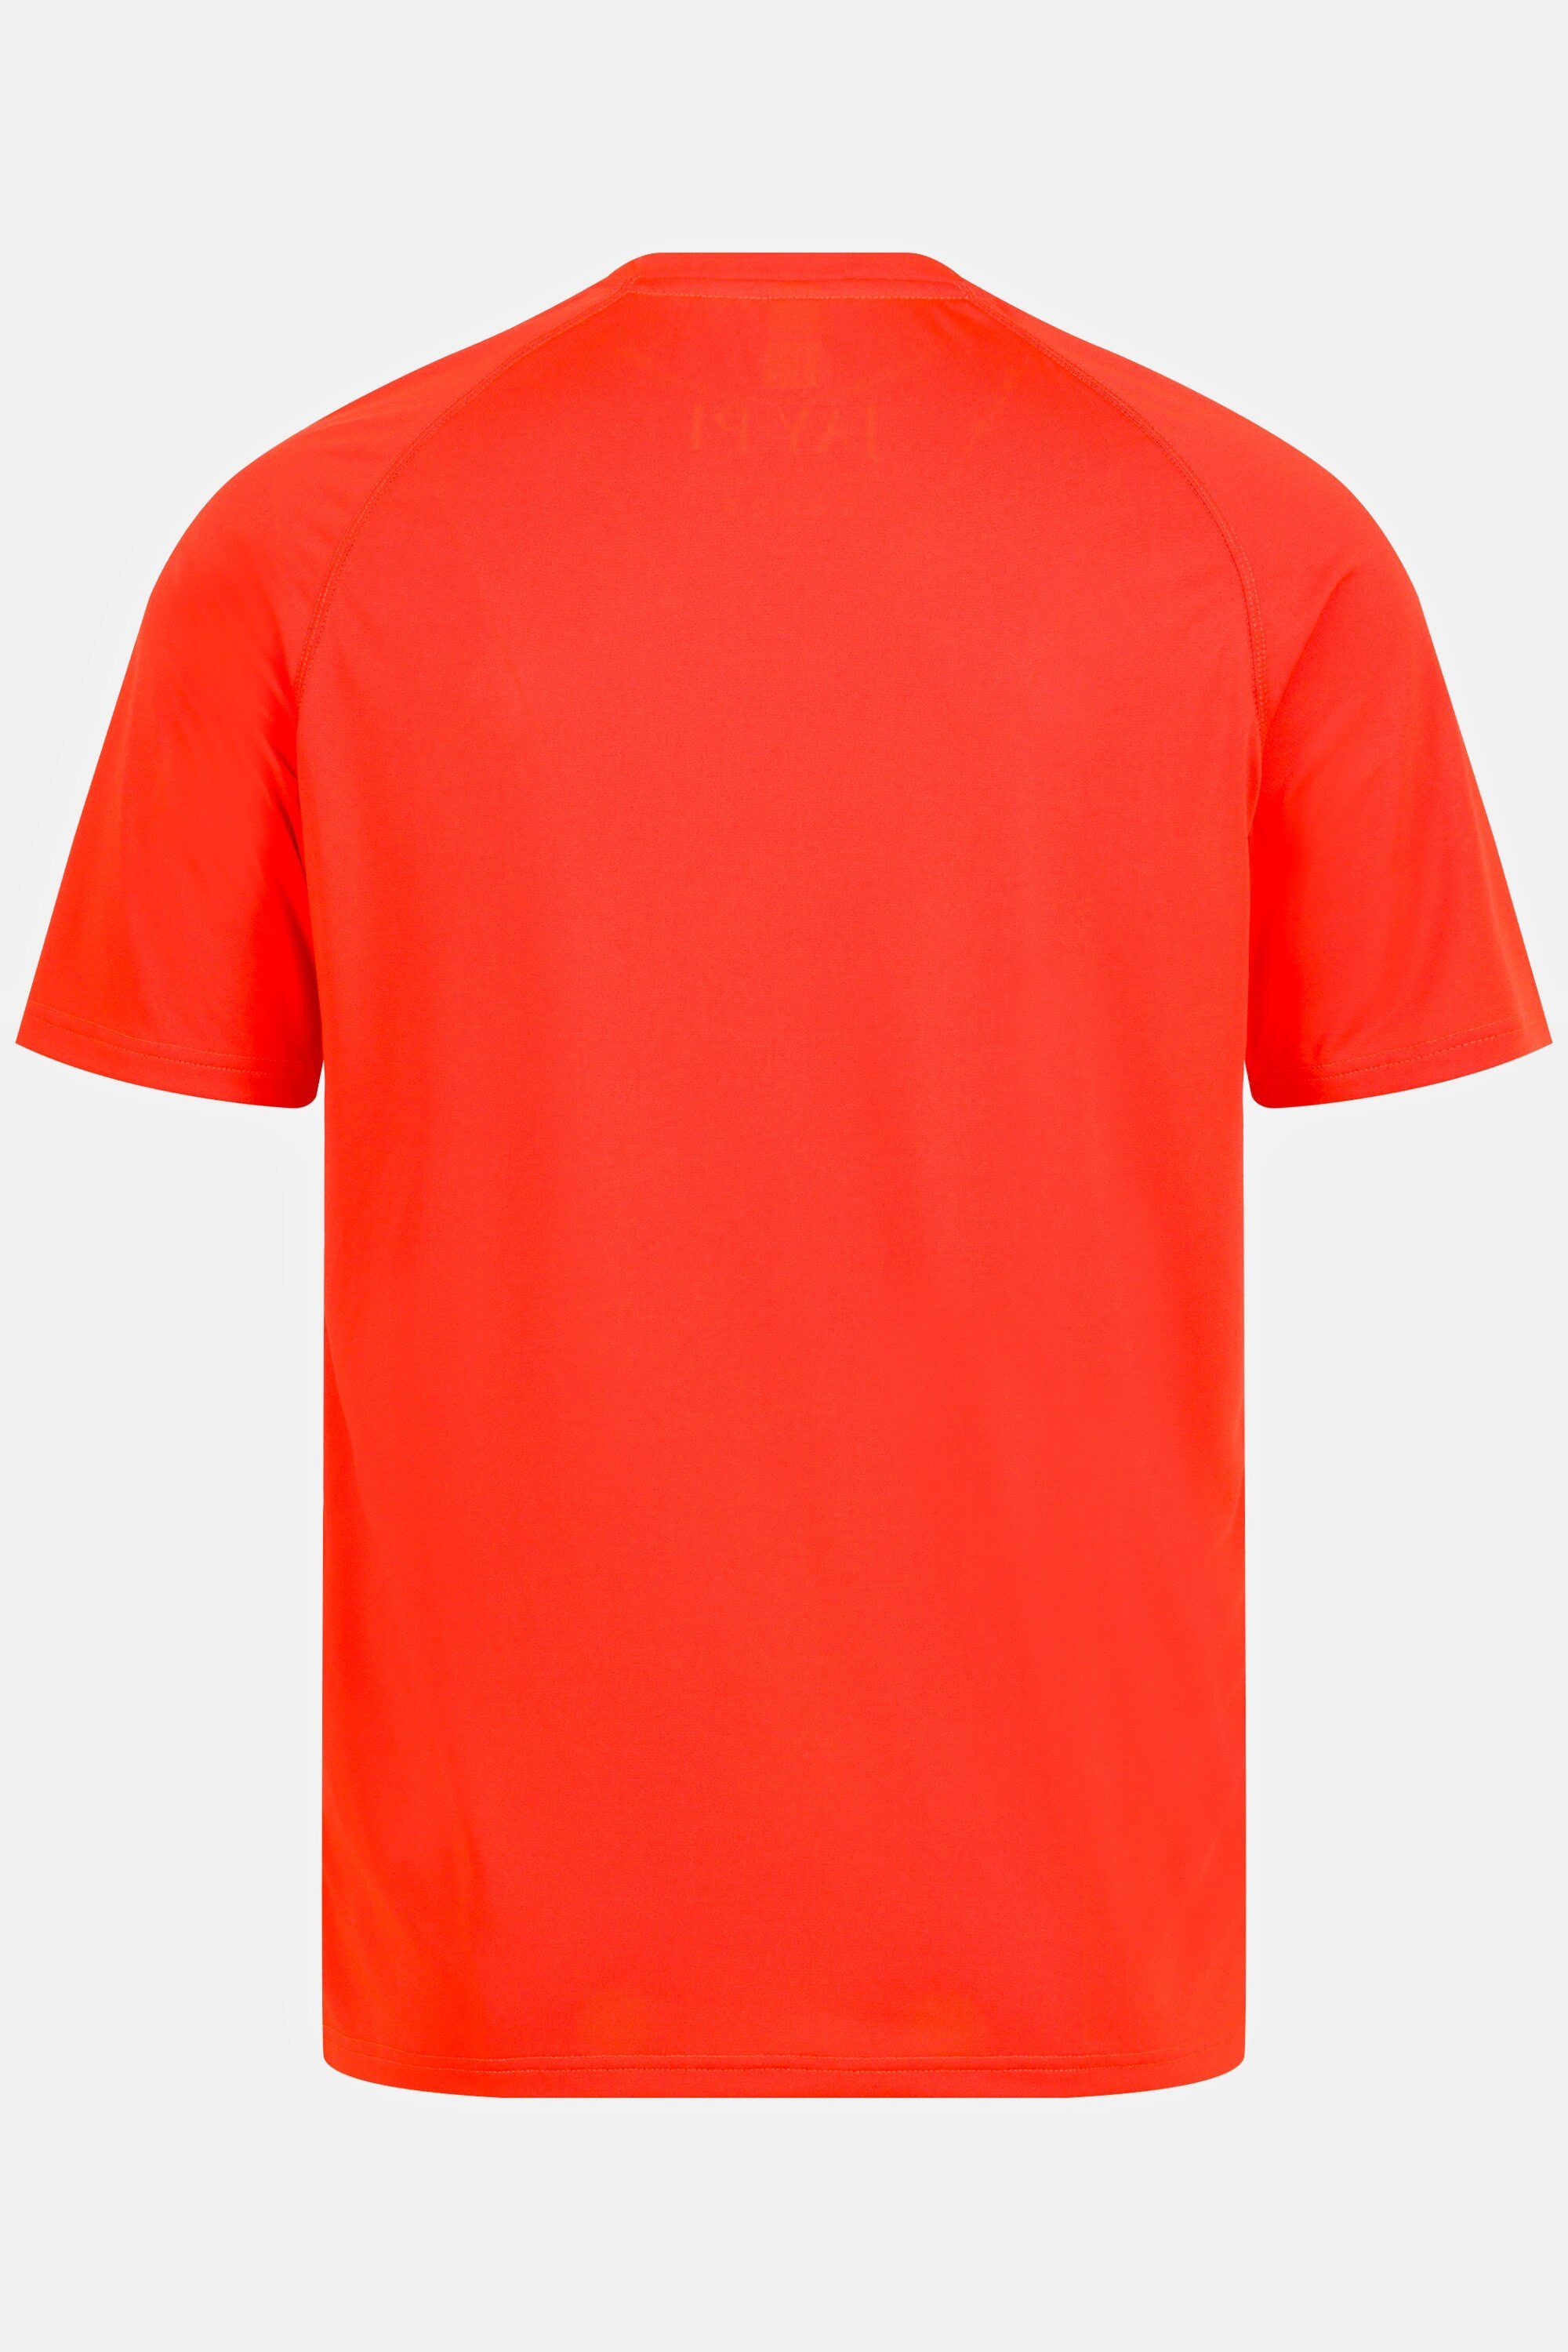 T-Shirt Funktions-Shirt Neon JP1880 Halbarm QuickDry